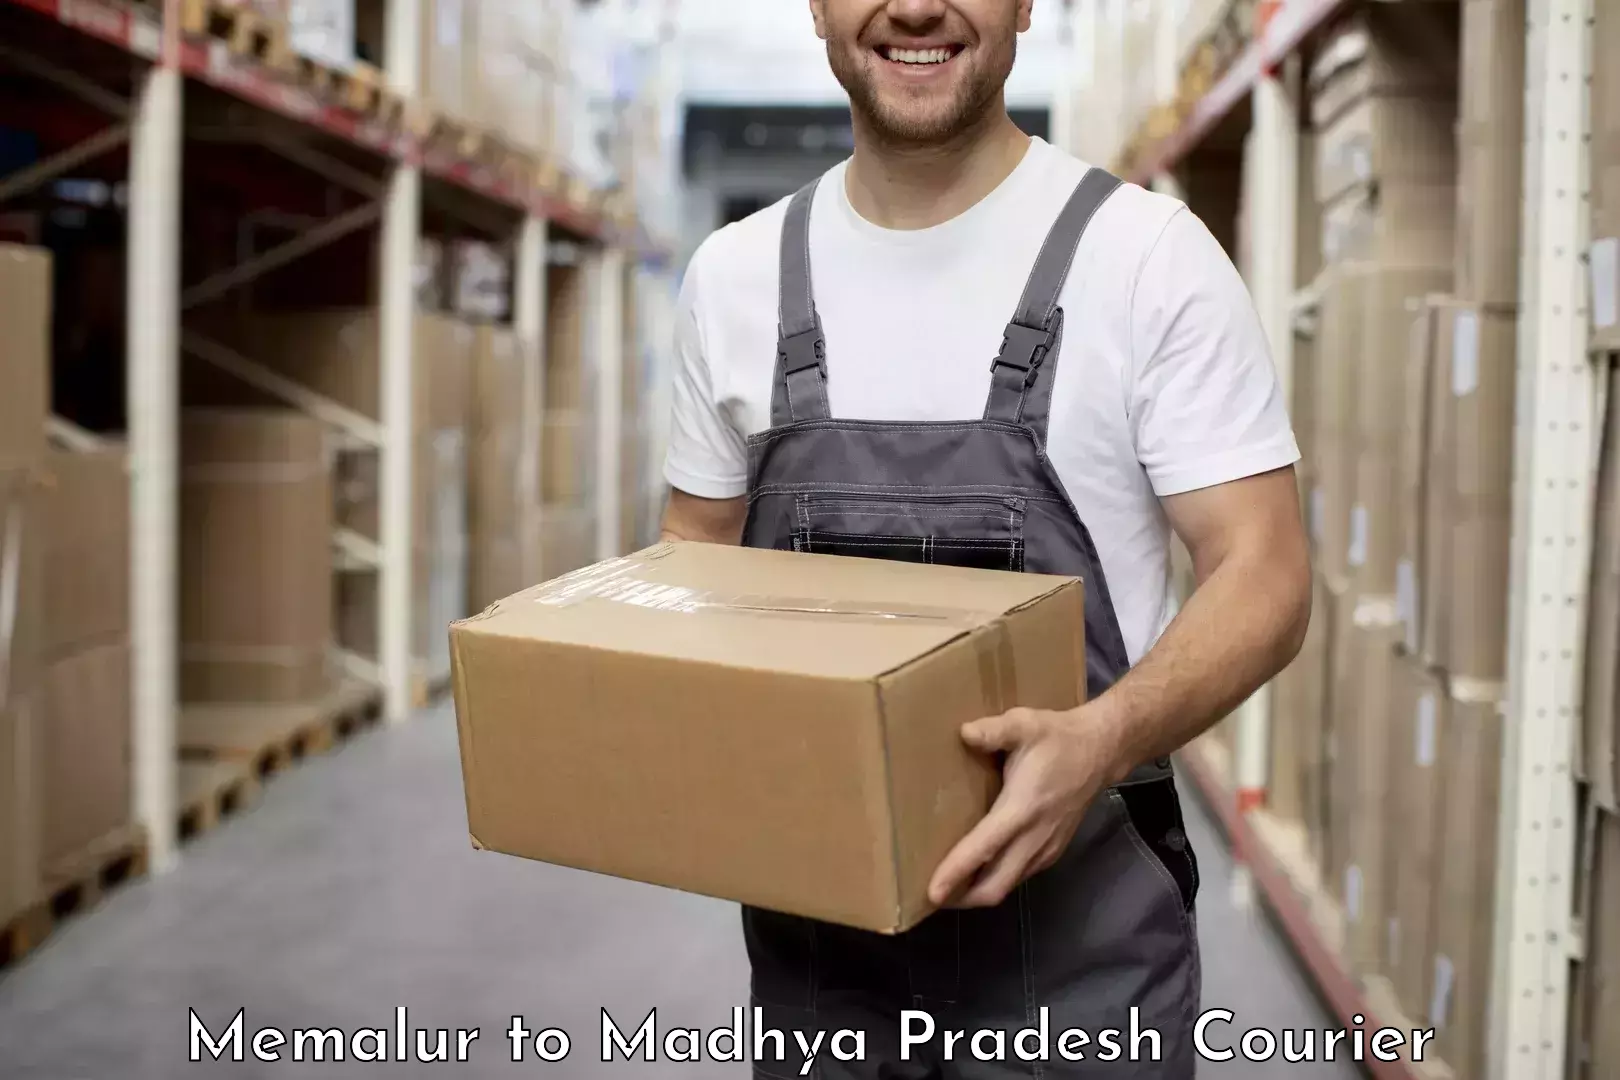 On-demand shipping options Memalur to Depalpur